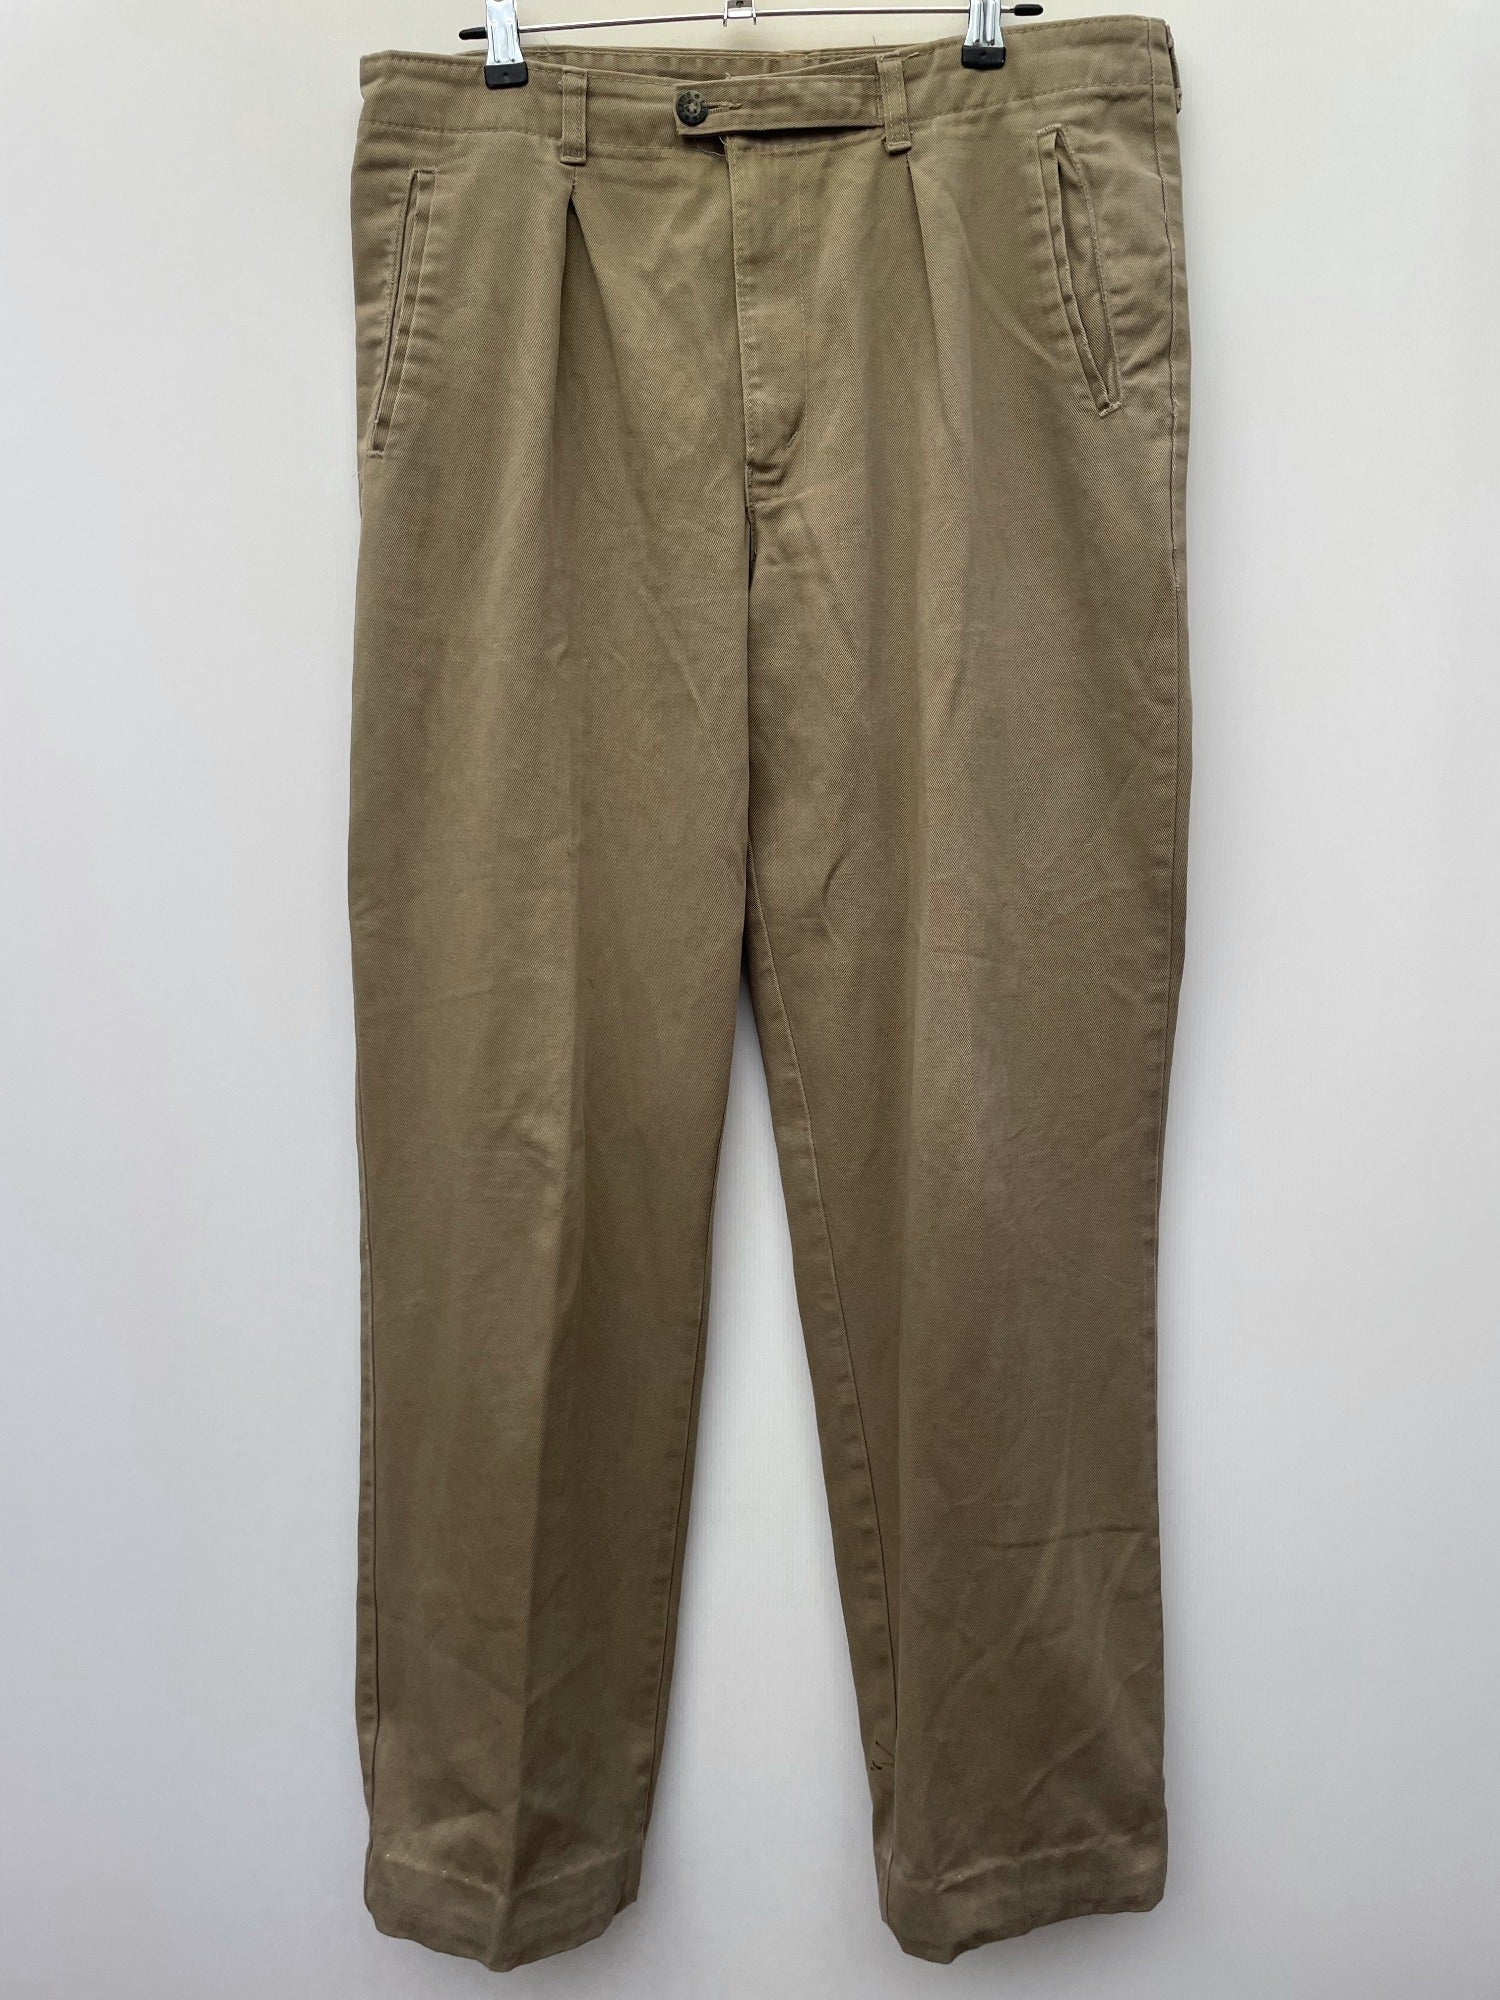 Vintage Levis Chino Trousers - Size W34, L32 - Urban Village Vintage –  UrbanVillageVintage